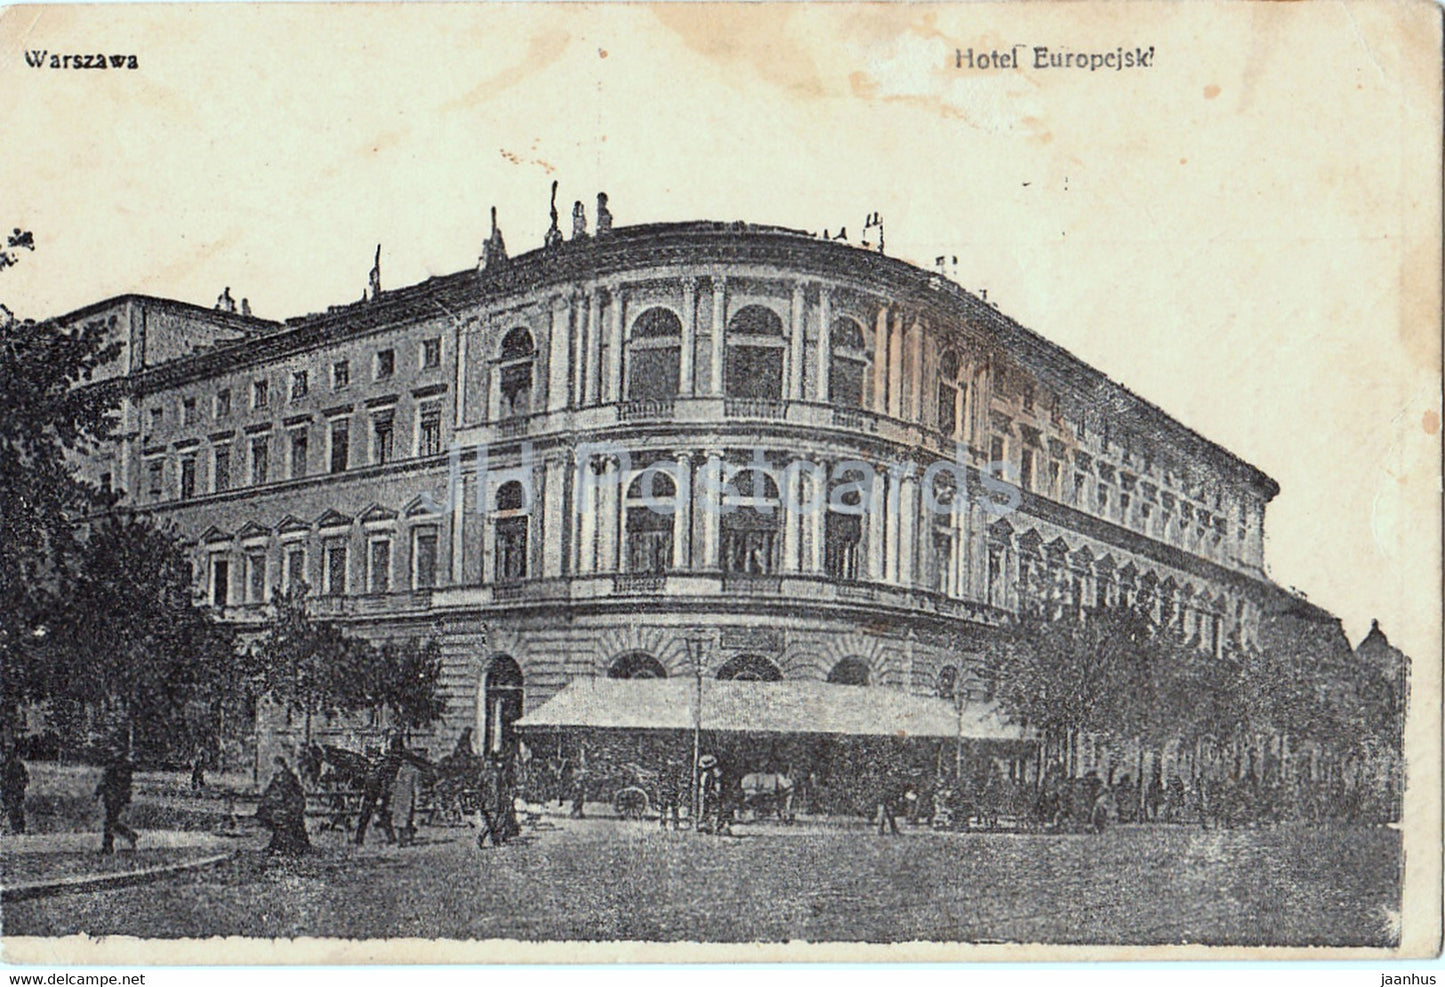 Warszawa - Hotel Europejski - Feldpost - old postcard - 1916 - Poland - used - JH Postcards